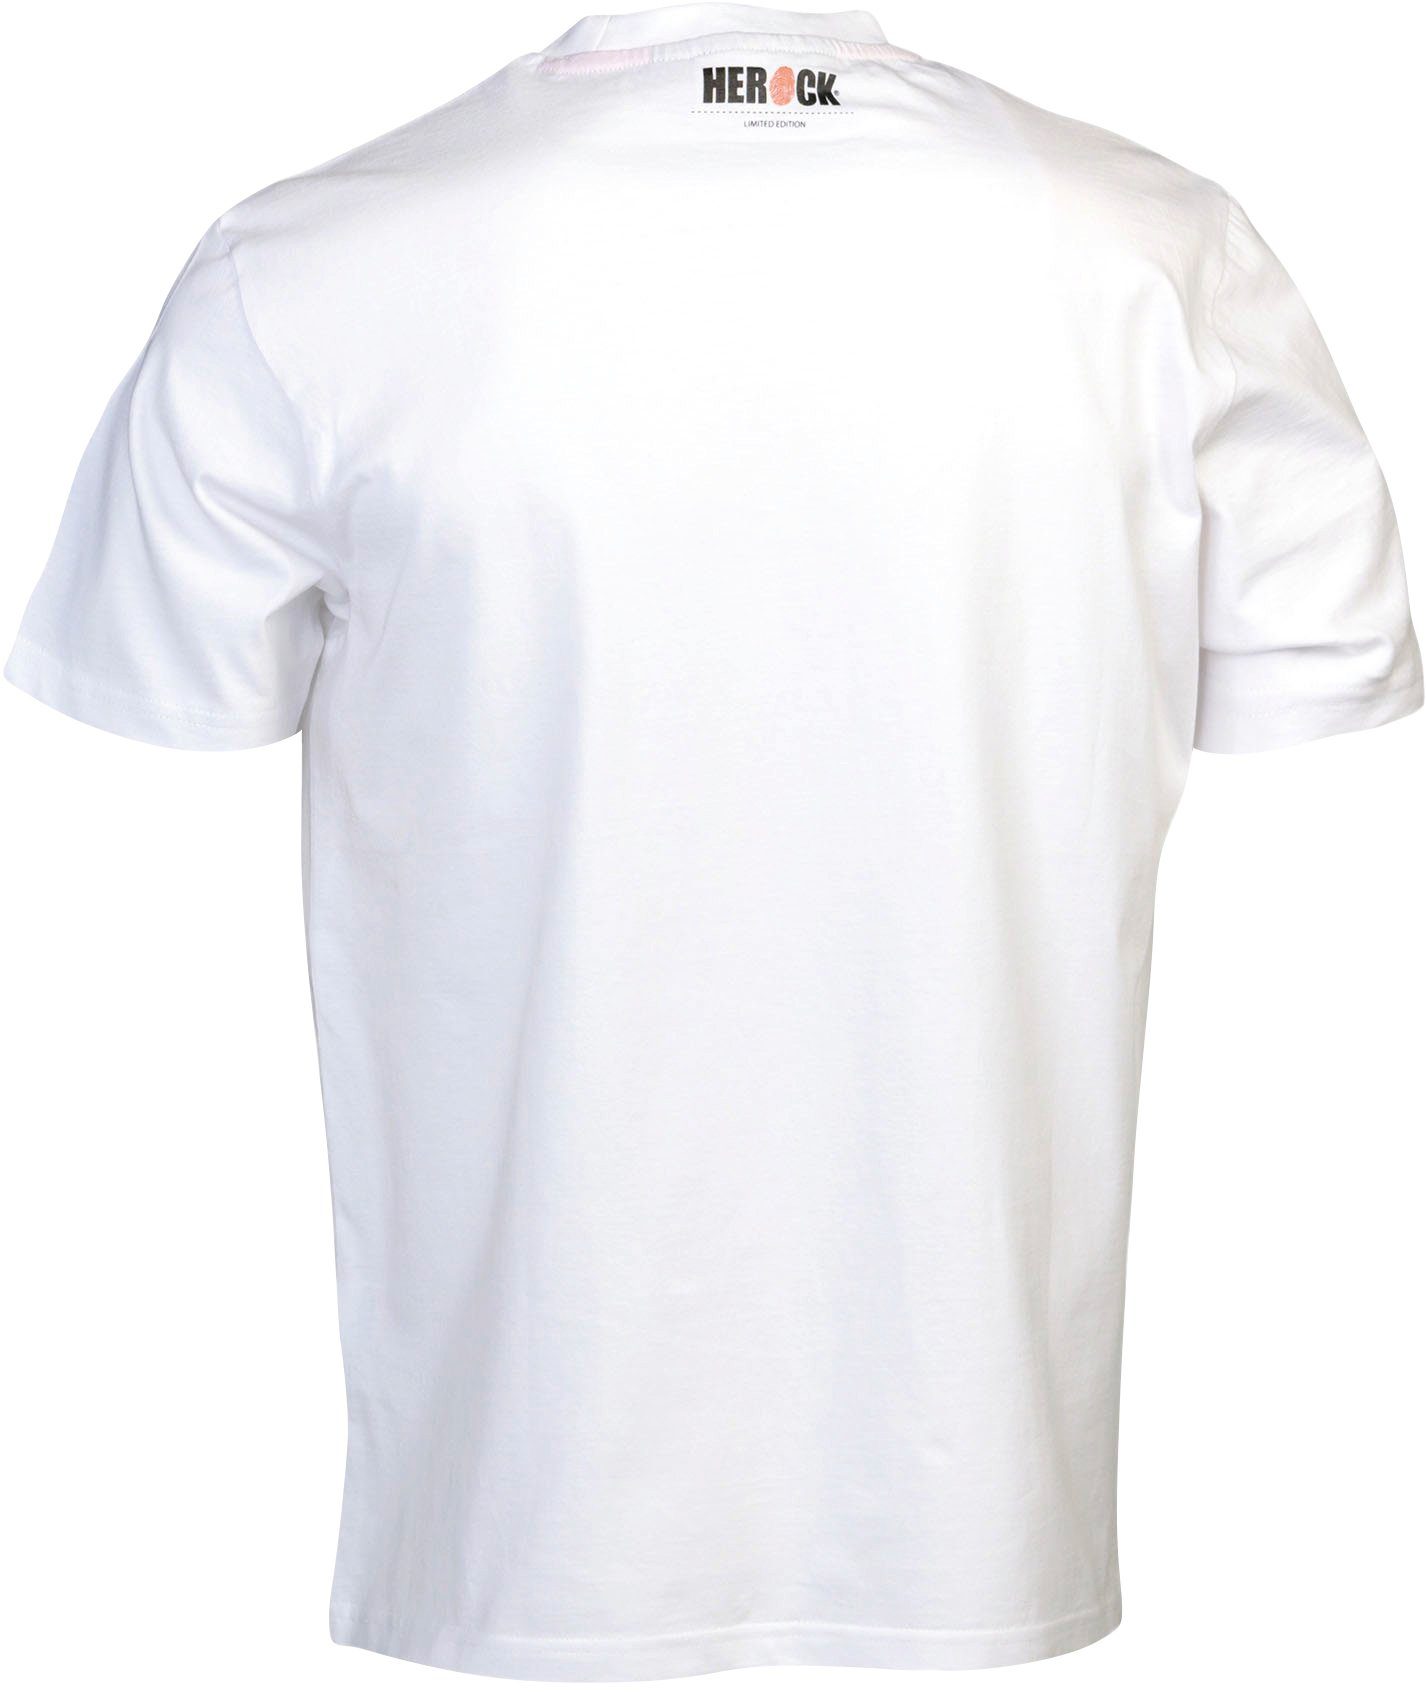 Herock T-Shirt Burst Mit kurzen Rundhalsausschnitt, Herock®-Aufdruck Ärmeln